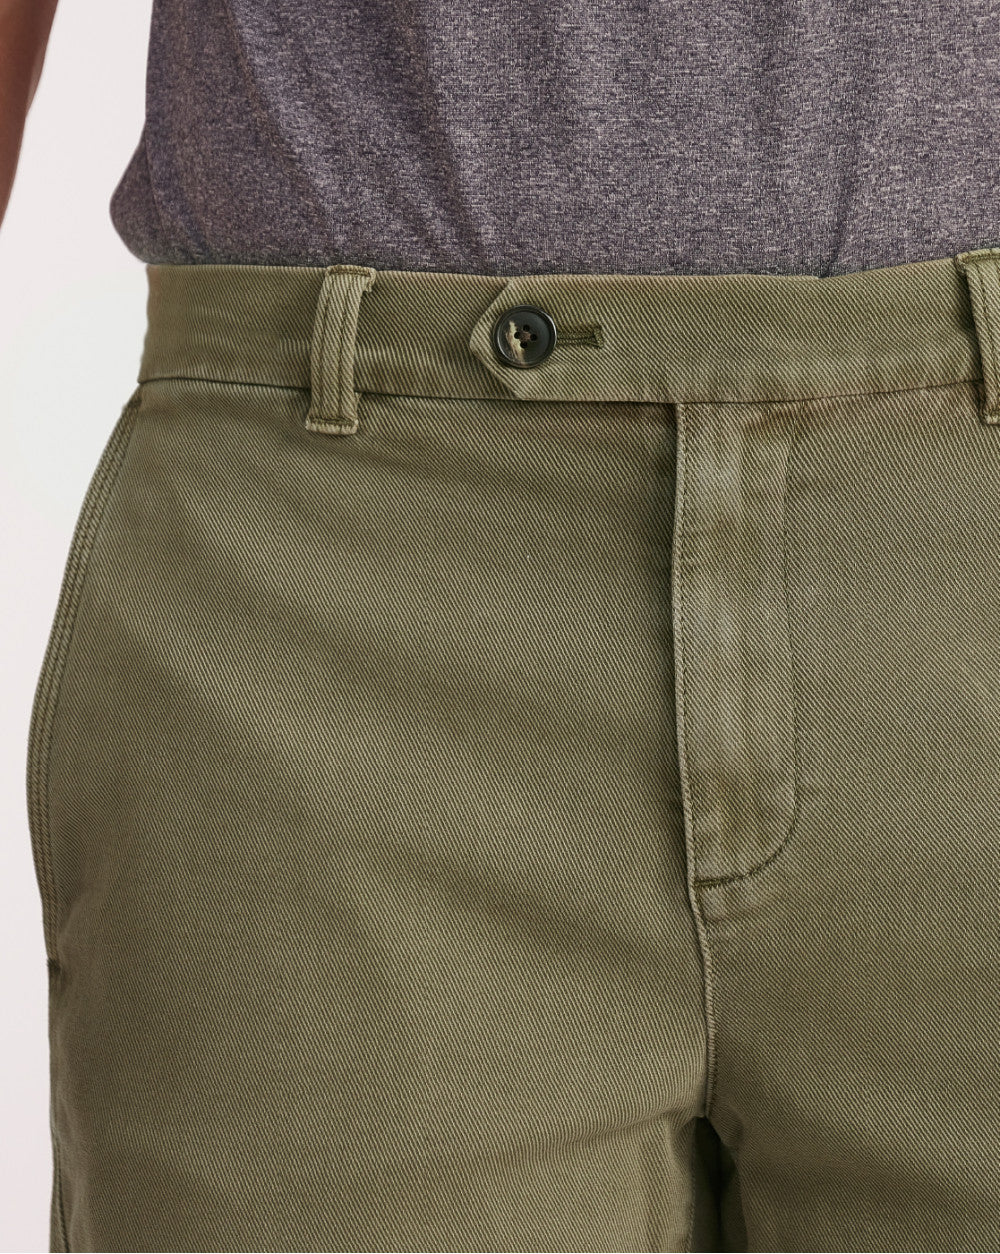 Garment Dyed Elasticized Shorts - Army Green